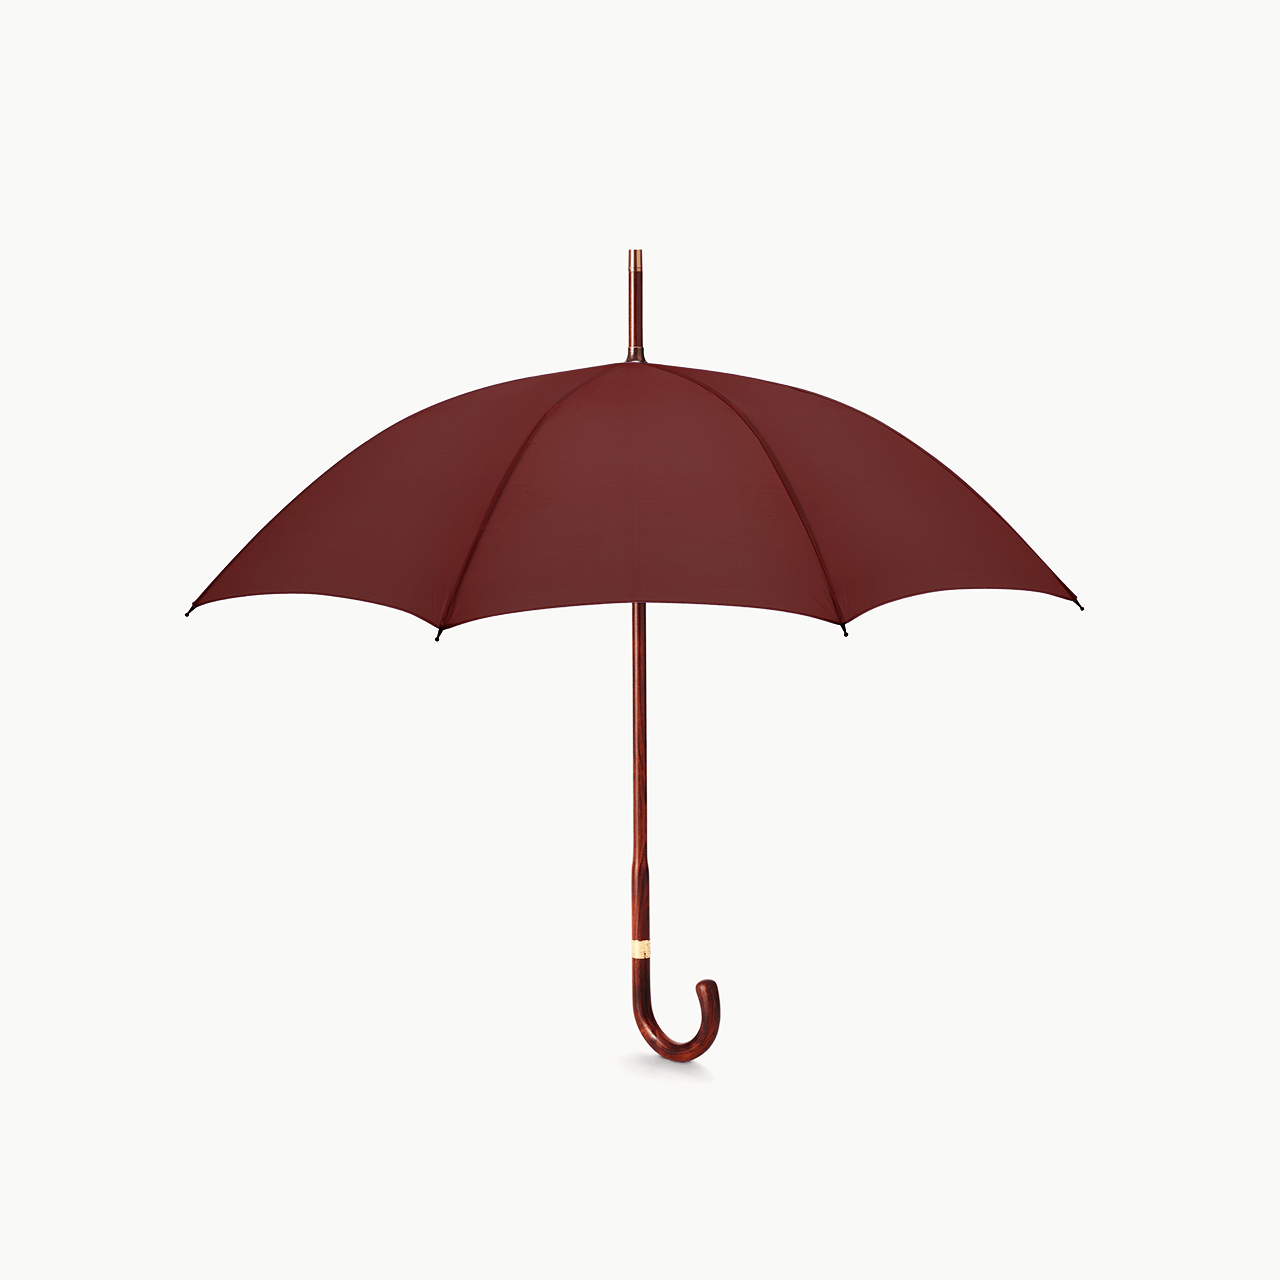 Stripped Cherry Umbrella for Women - Burgundy - Swaine